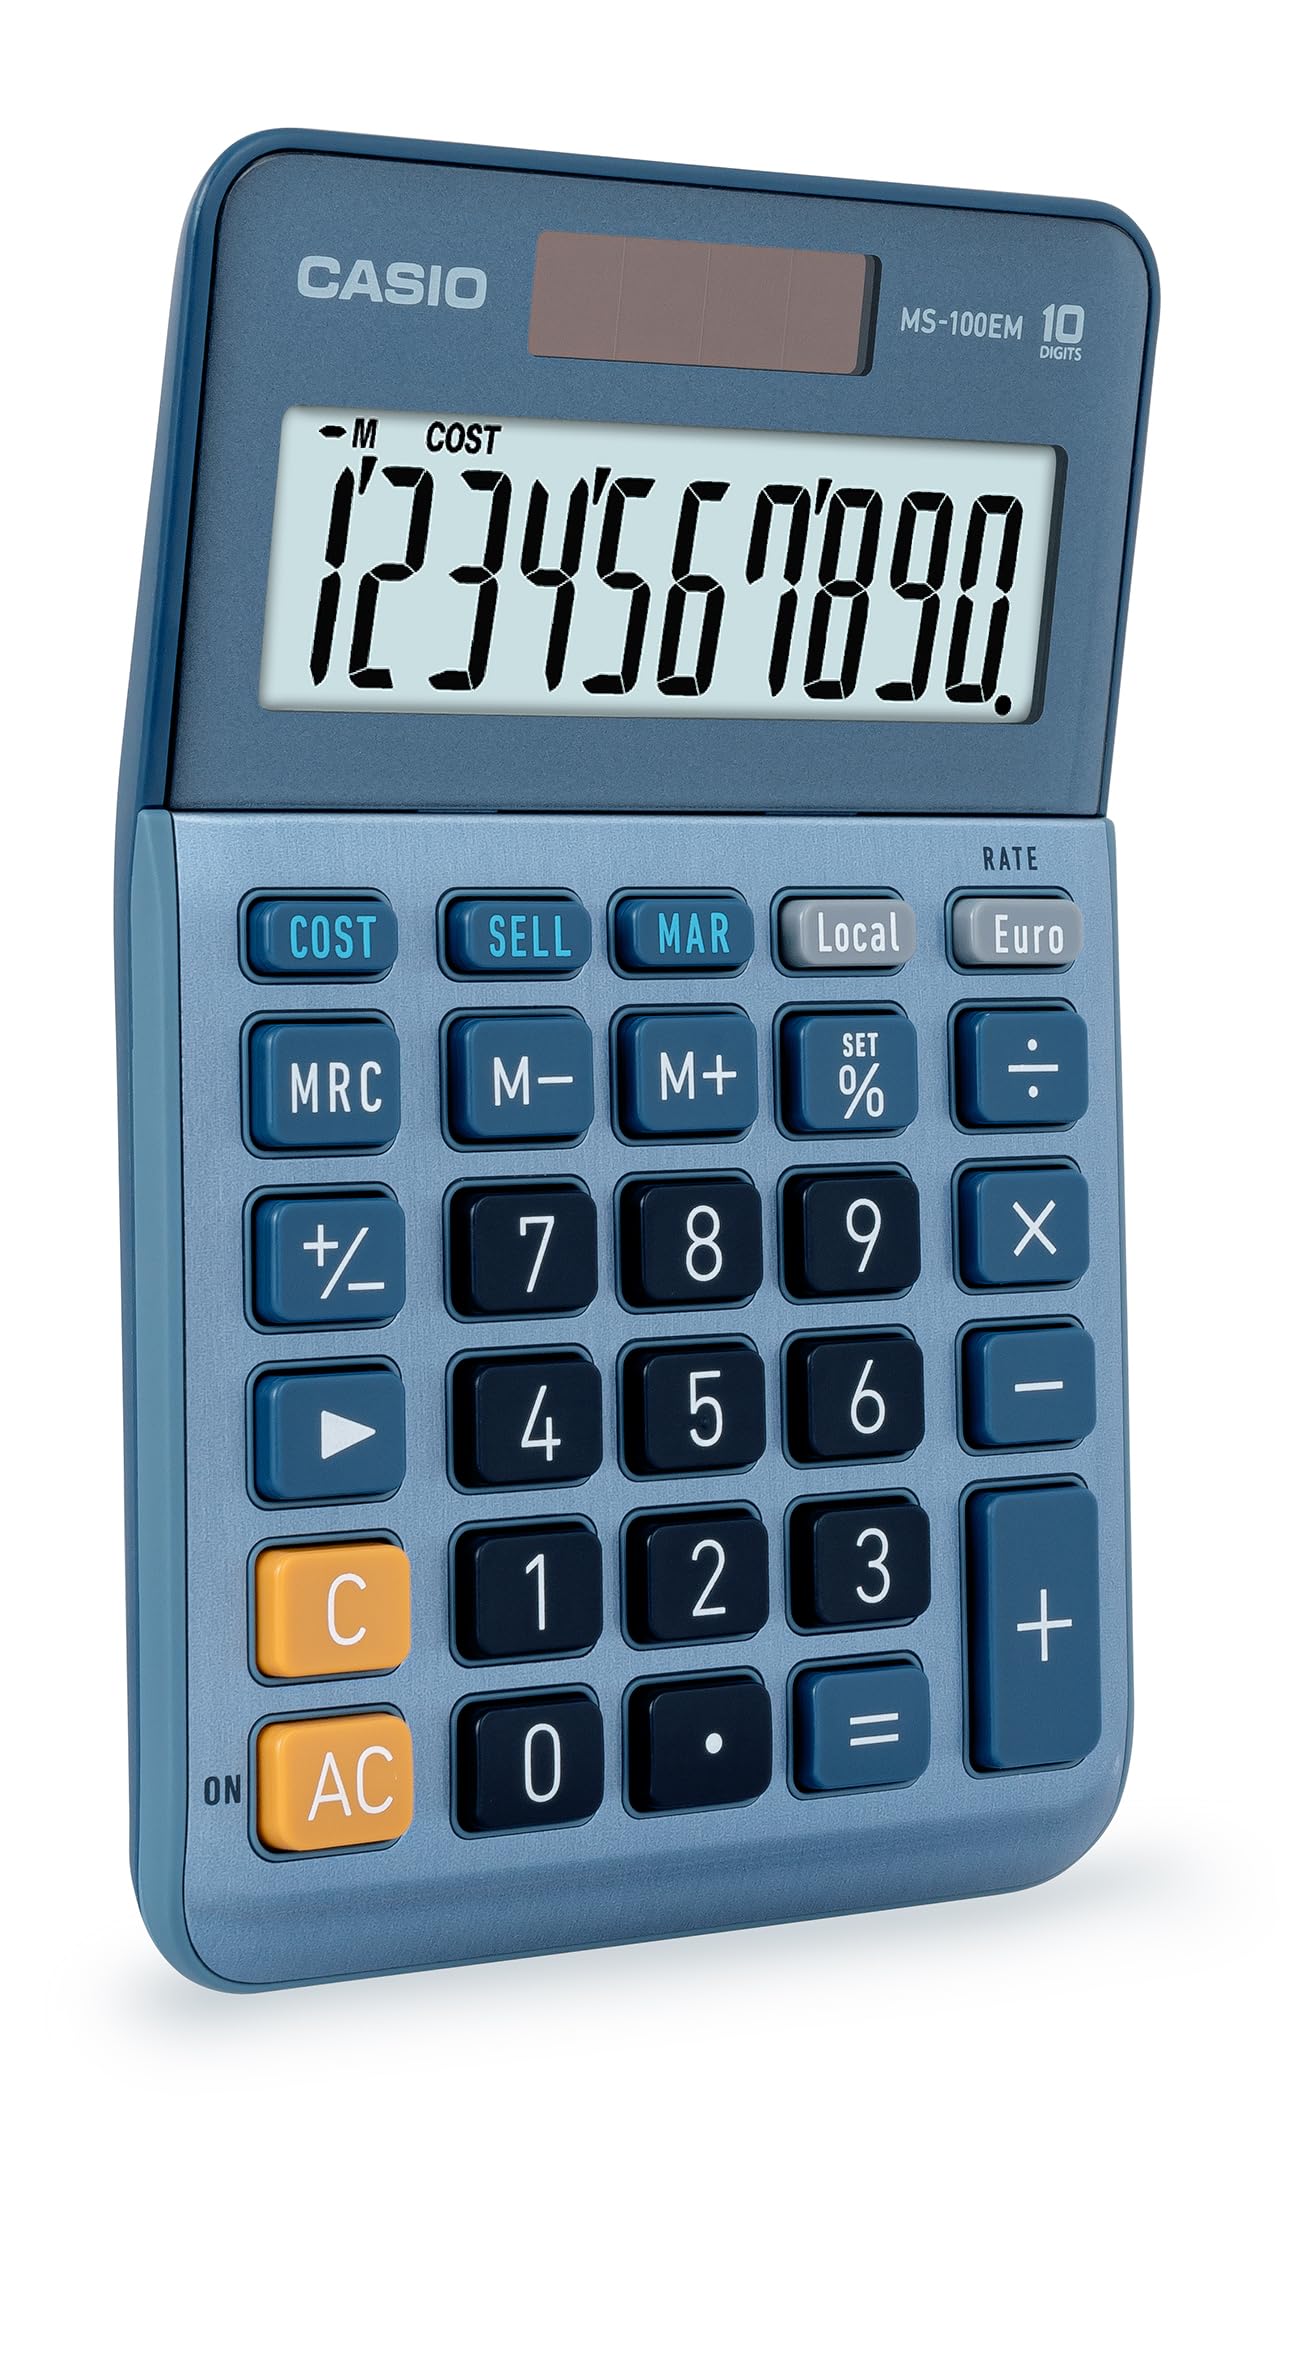 CASIO MS-100EM Desktop Calculator 10 Digit Currency Conversion Cost/Sell/Margin, Aluminium Front, Solar/Battery Operated, Blue